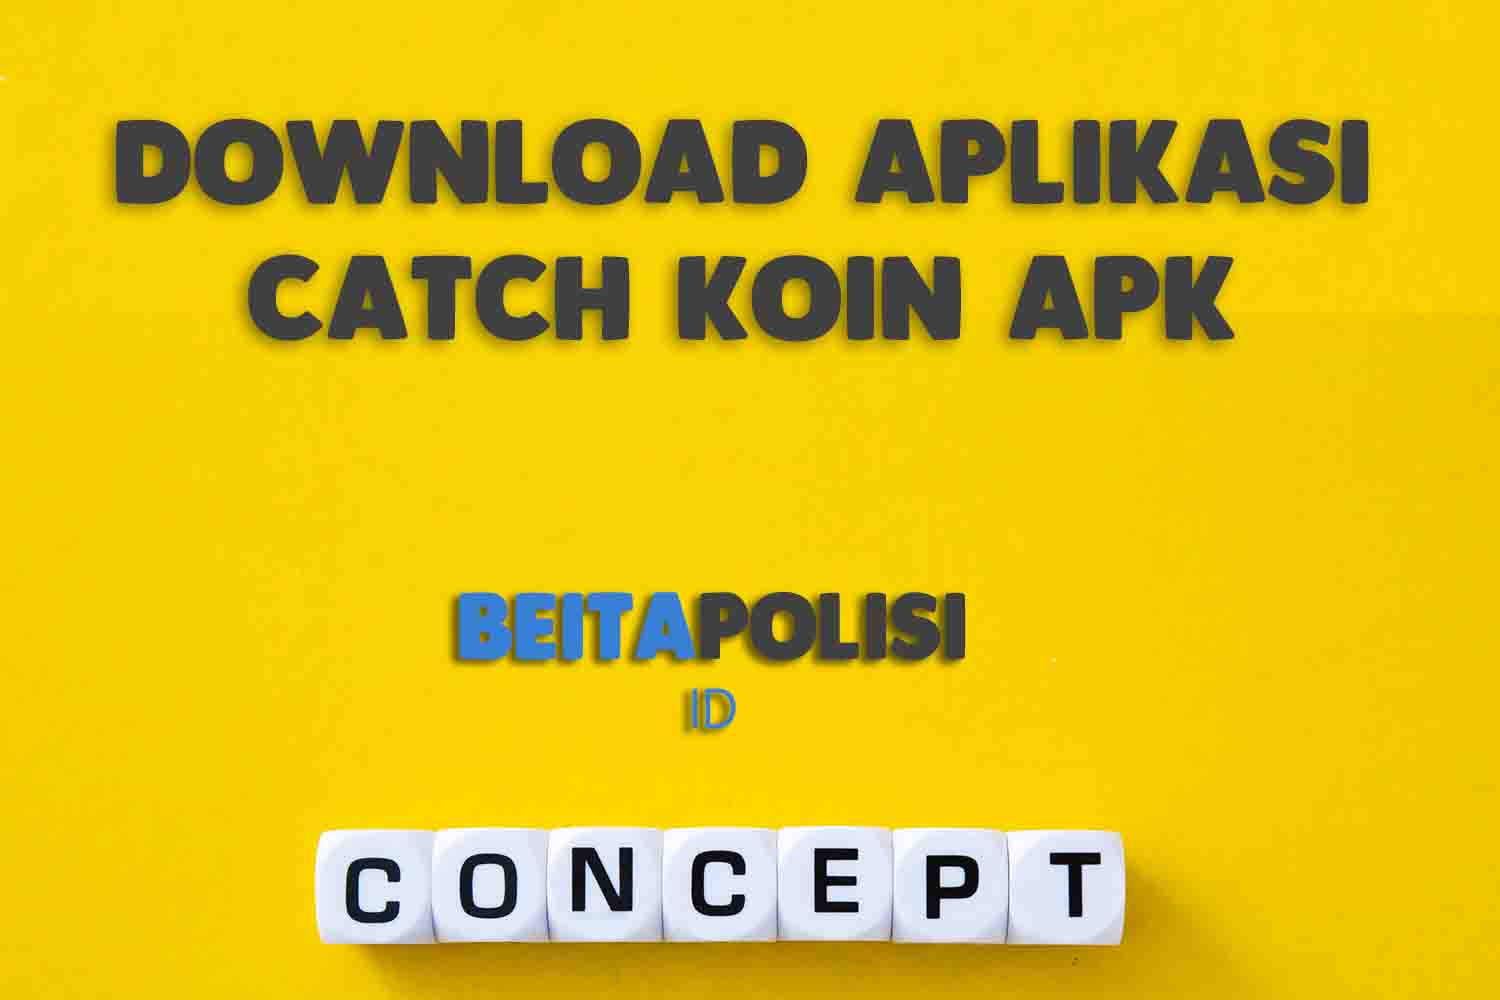 Download Aplikasi Catch Koin Apk